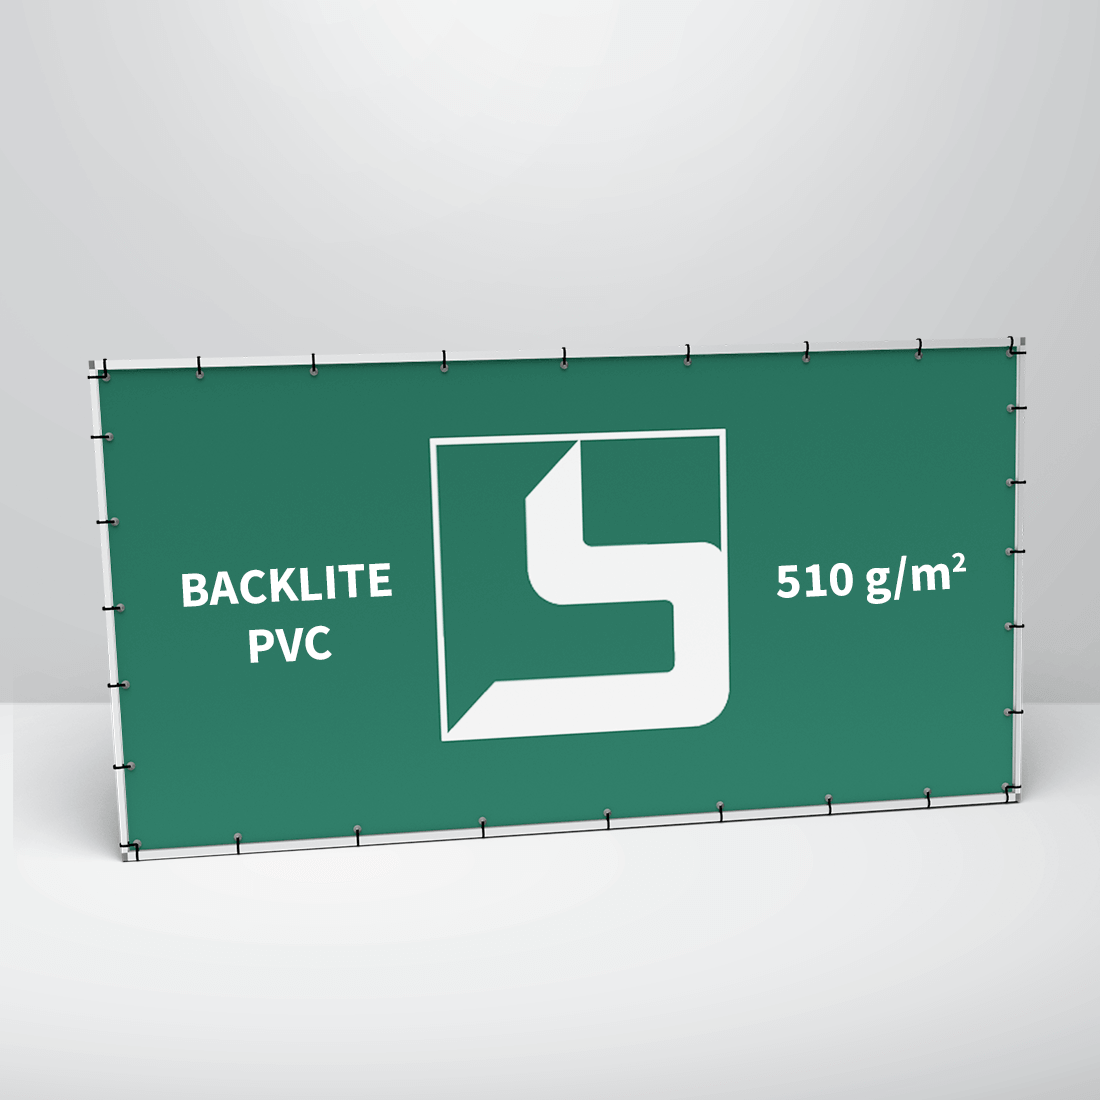 Transparent: Backlit PVC, 510 g/m2